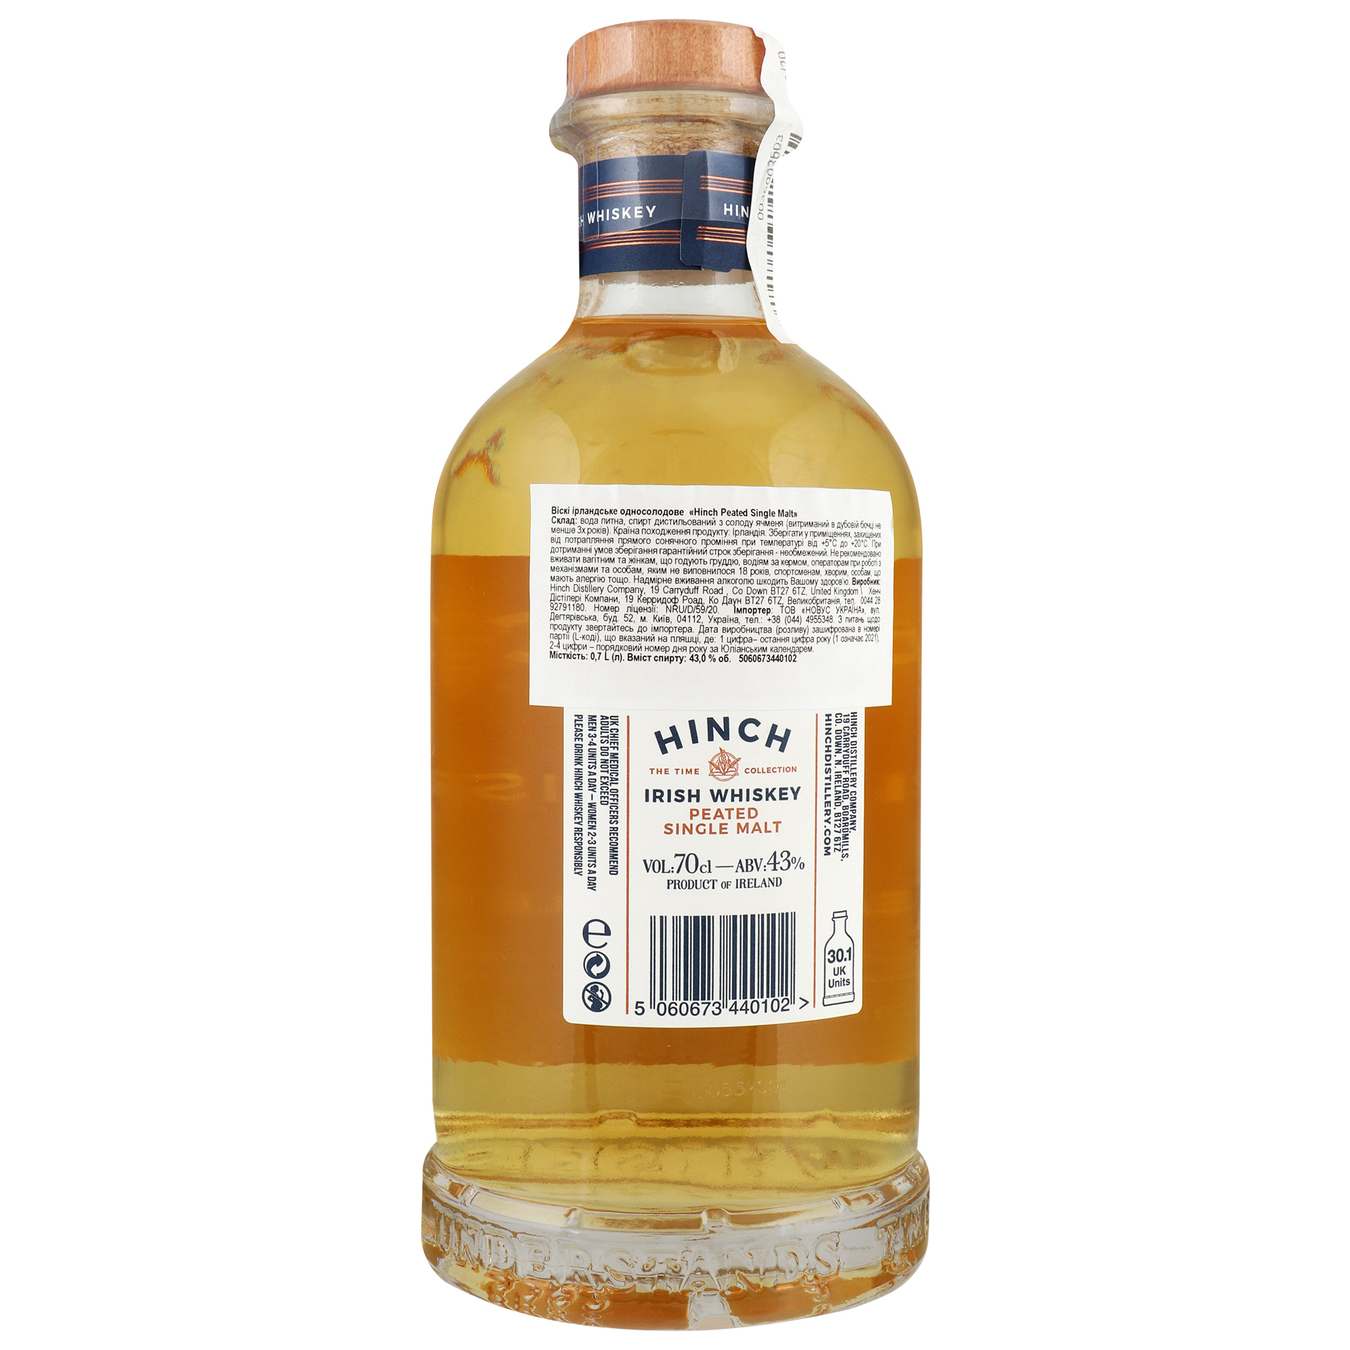 Whiskey Hinch Peated Single Malt 43% 0,7l 2